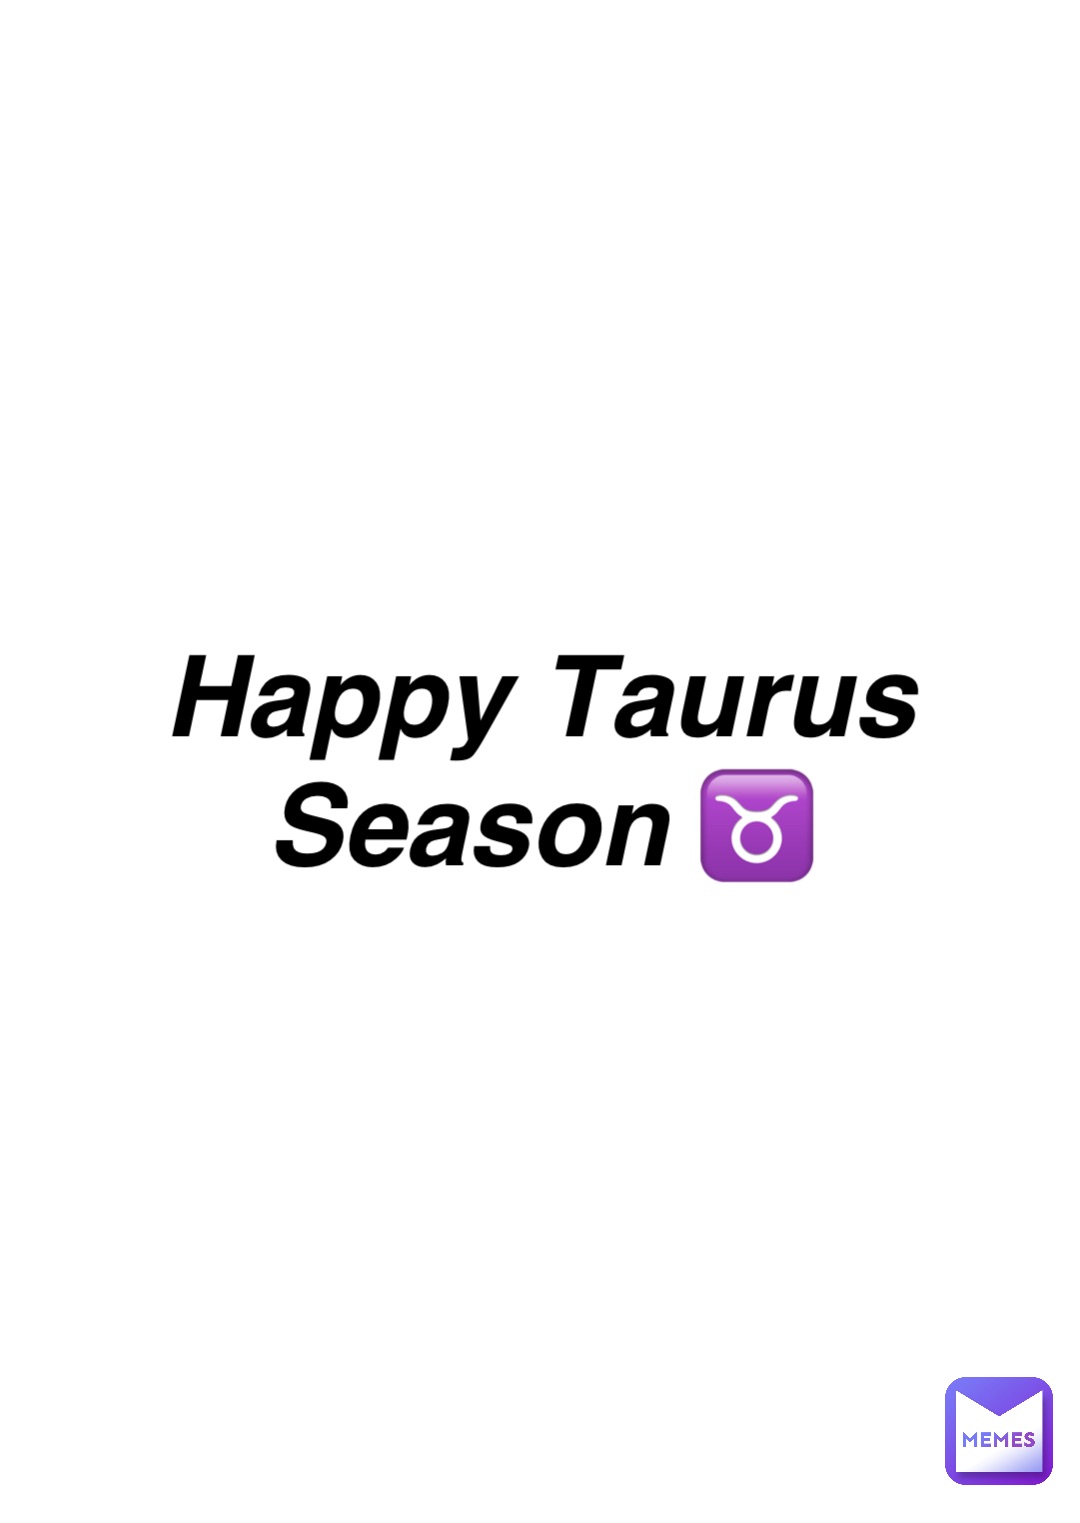 Double tap to edit Happy Taurus
Season ♉️